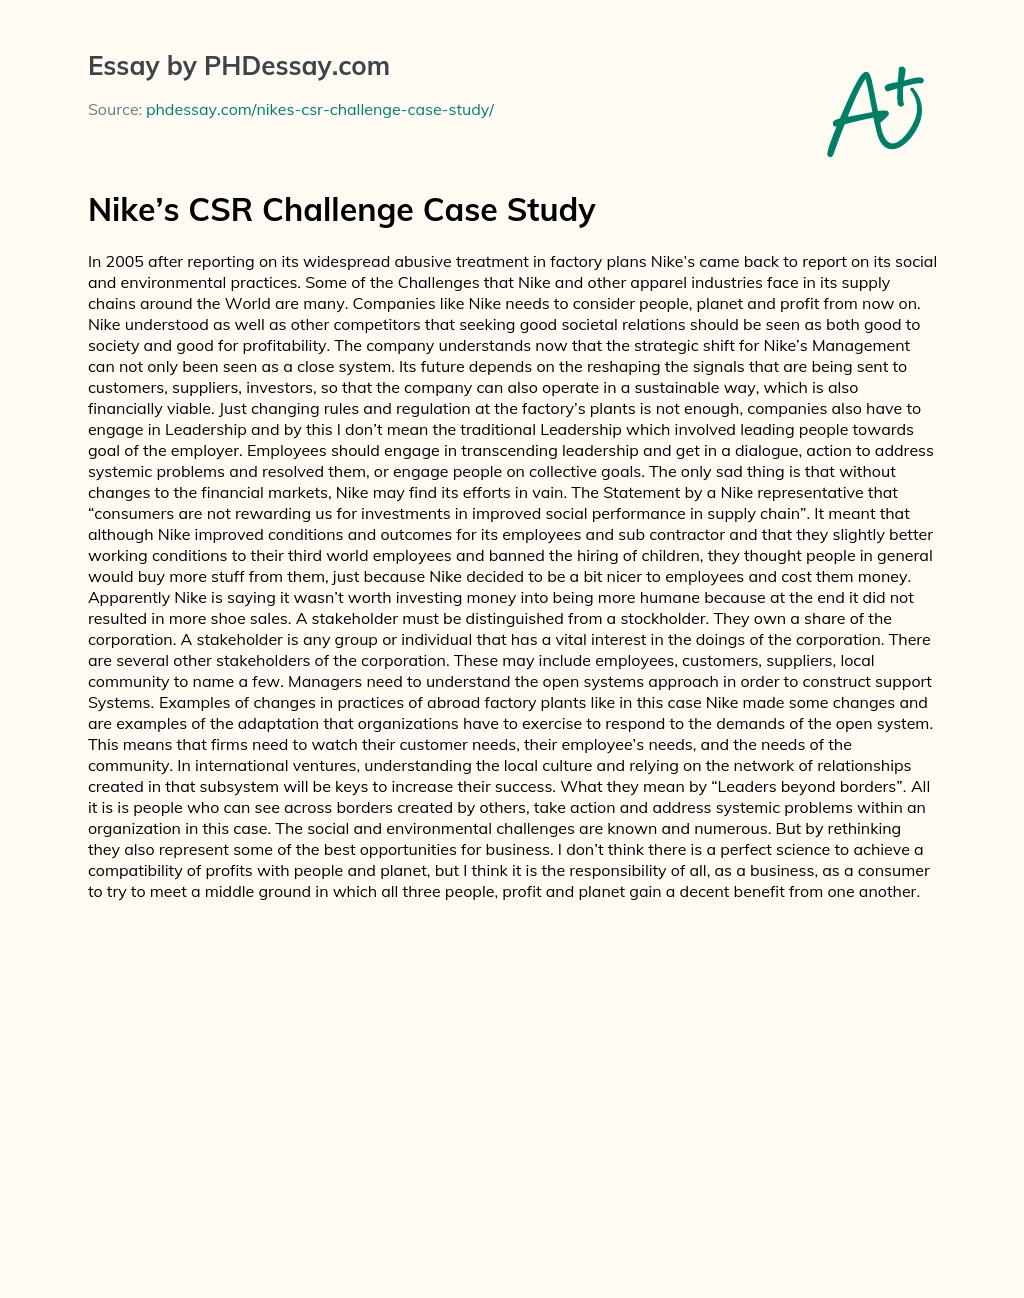 nike csr case study